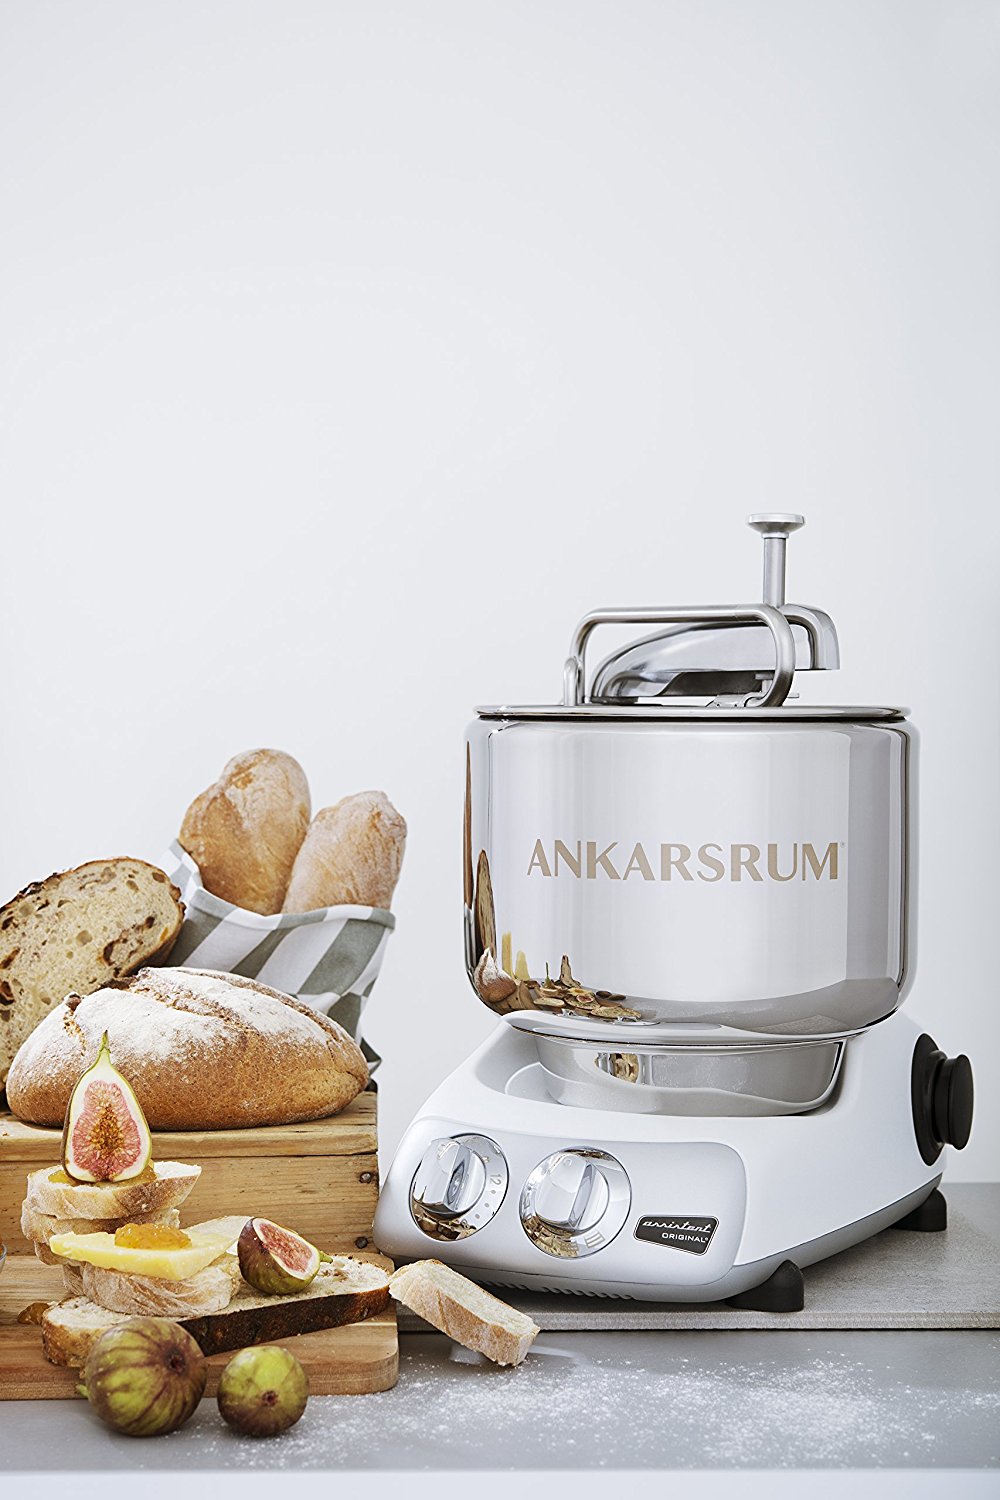 Ankarsrum Original Stand Mixer - Bake from Scratch